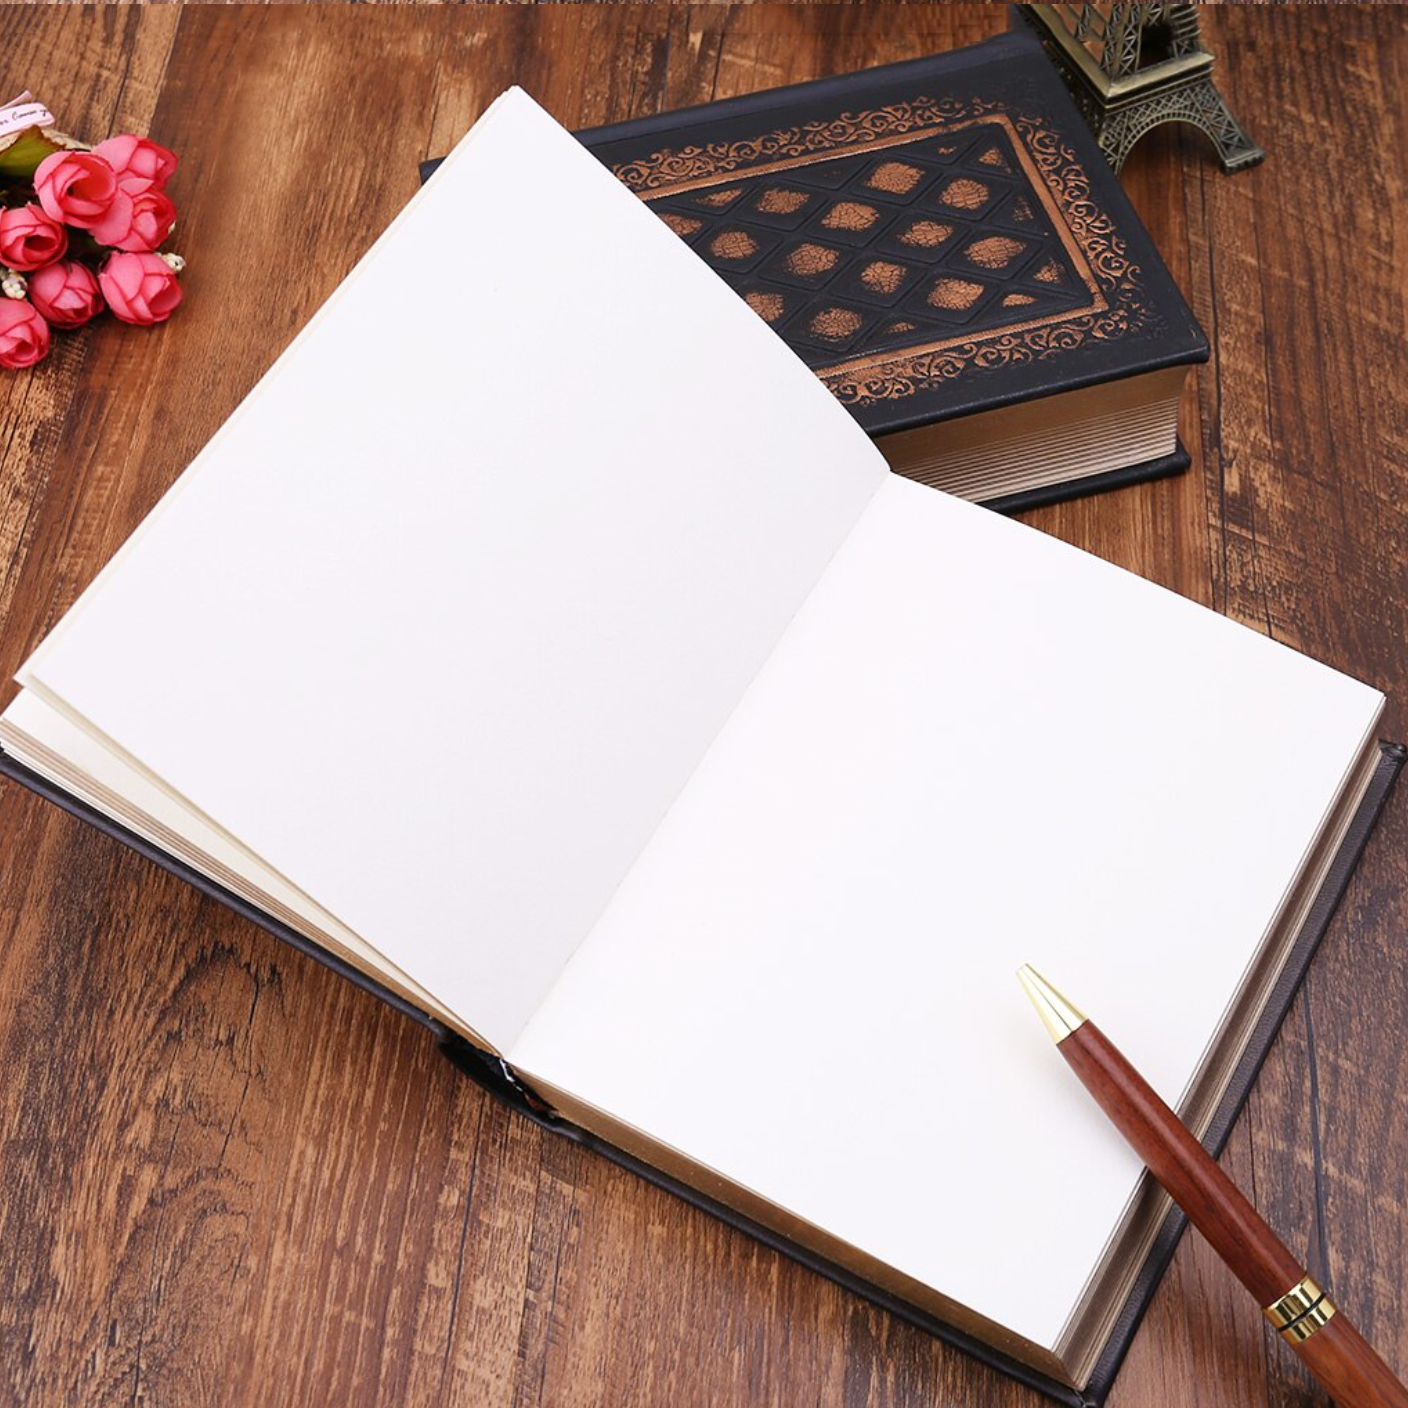 Blank Hard Cover Leather Sketchbook / Journal